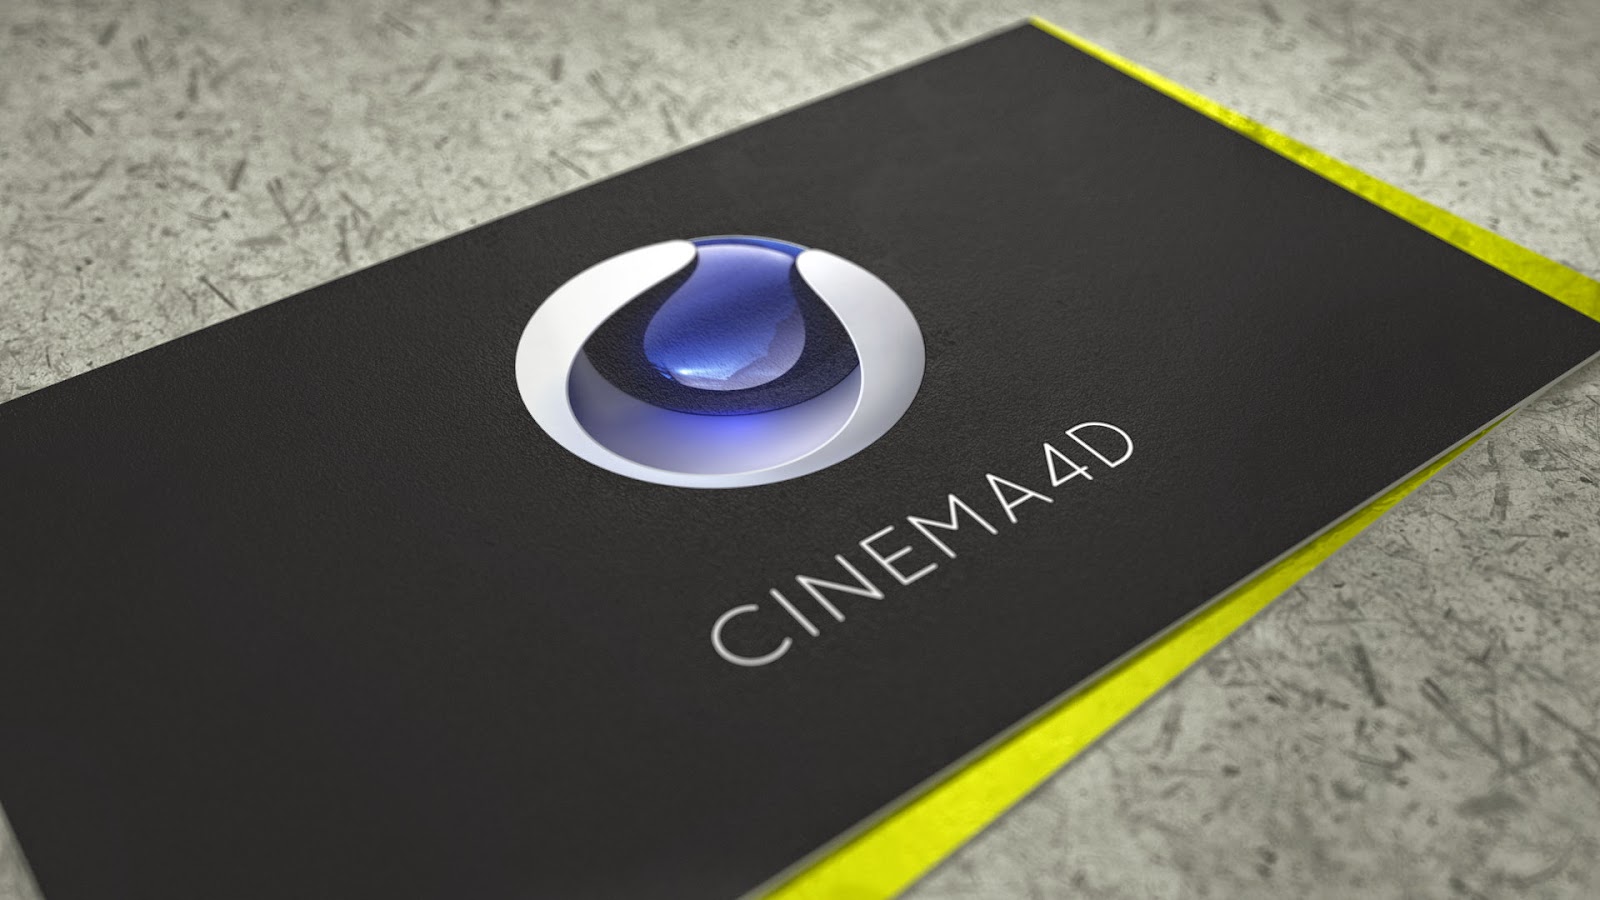 Maxon CINEMA 4D Studio R21.115 + Crack Direct Download N Via Torrent